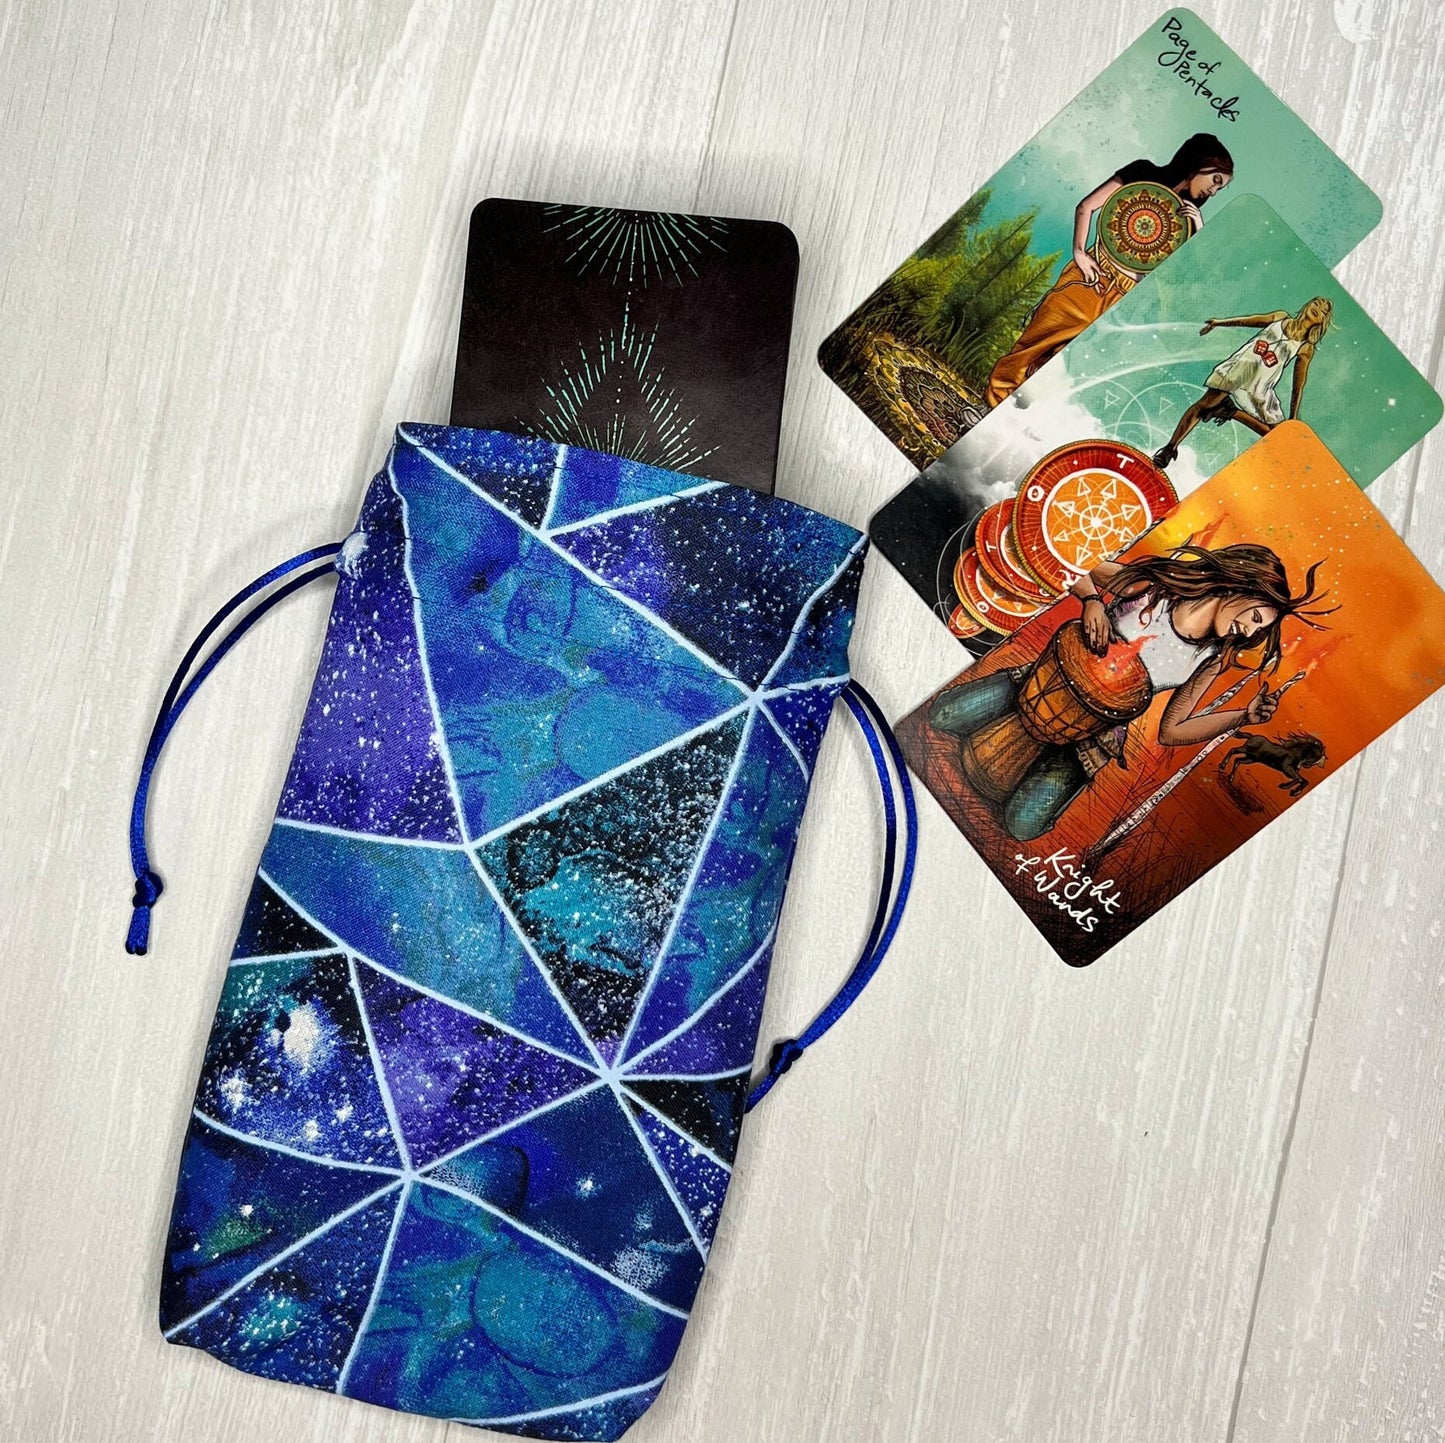 Blue Geometric Tarot Bag, Drawstring Pouch, Tarot Deck Storage Holder, Standard Tarot, Pagan Witchcraft Divination Tools Gifts & Supplies